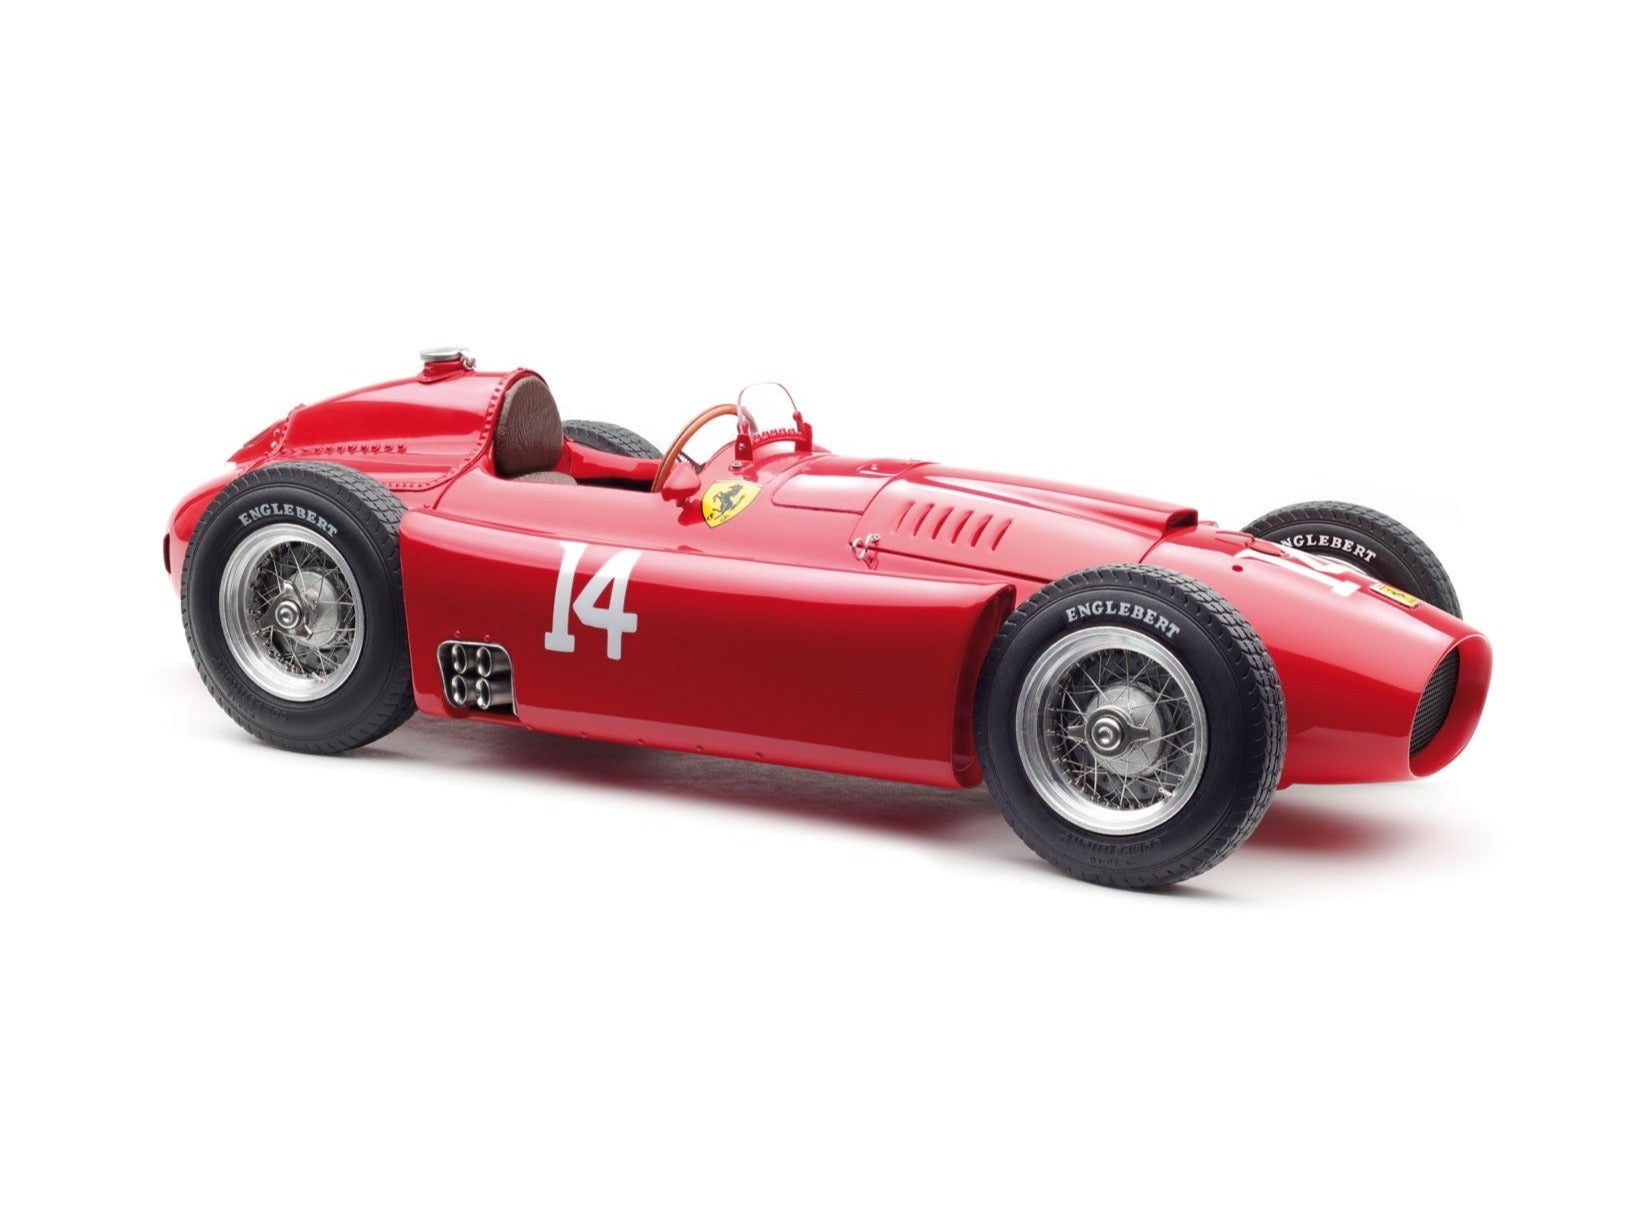 Ferrari D50, 1956 GP Frankreich #14 Collins